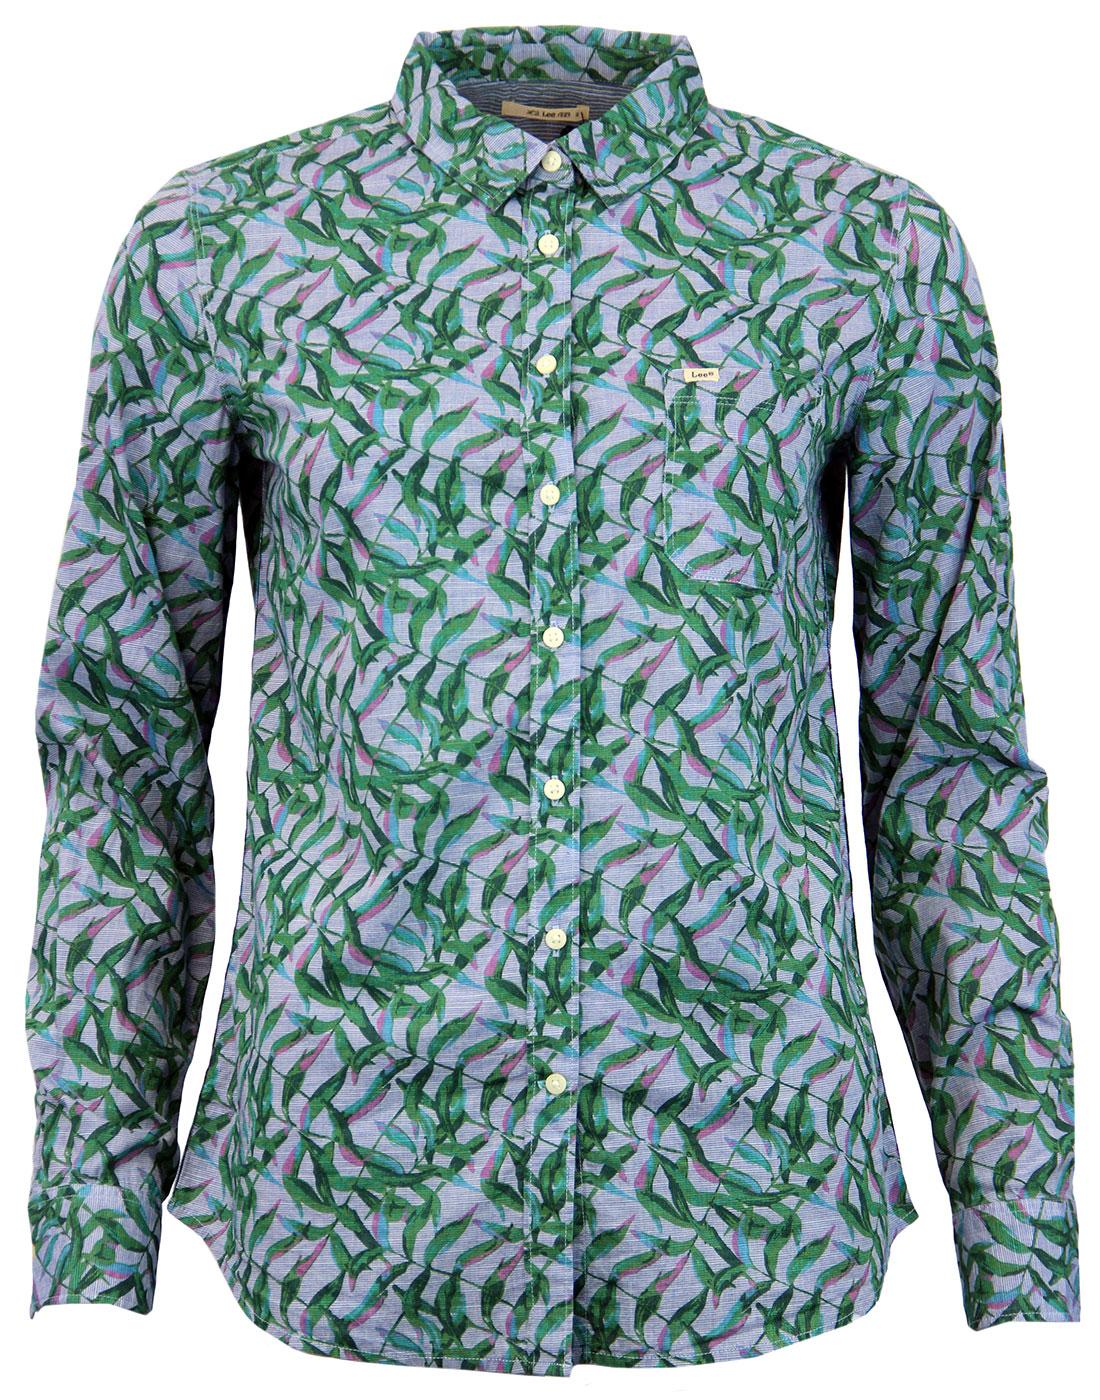 LEE Retro 70s Tropical Palm Print Chambray Shirt 